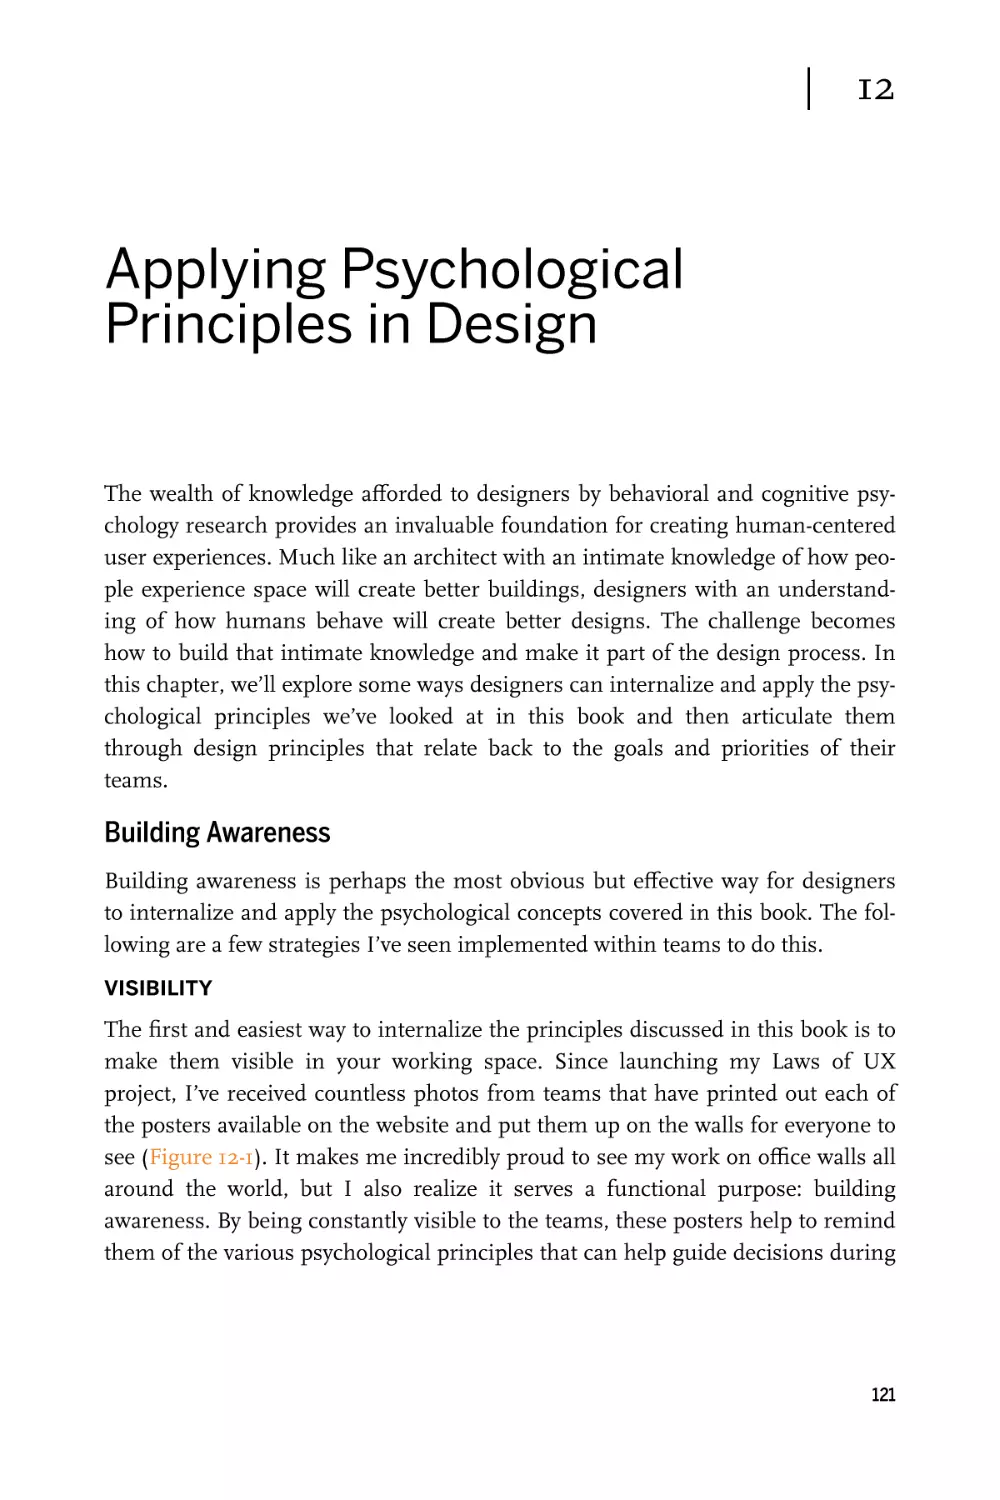 Chapter 12. Applying Psychological Principles in Design
Building Awareness
Visibility